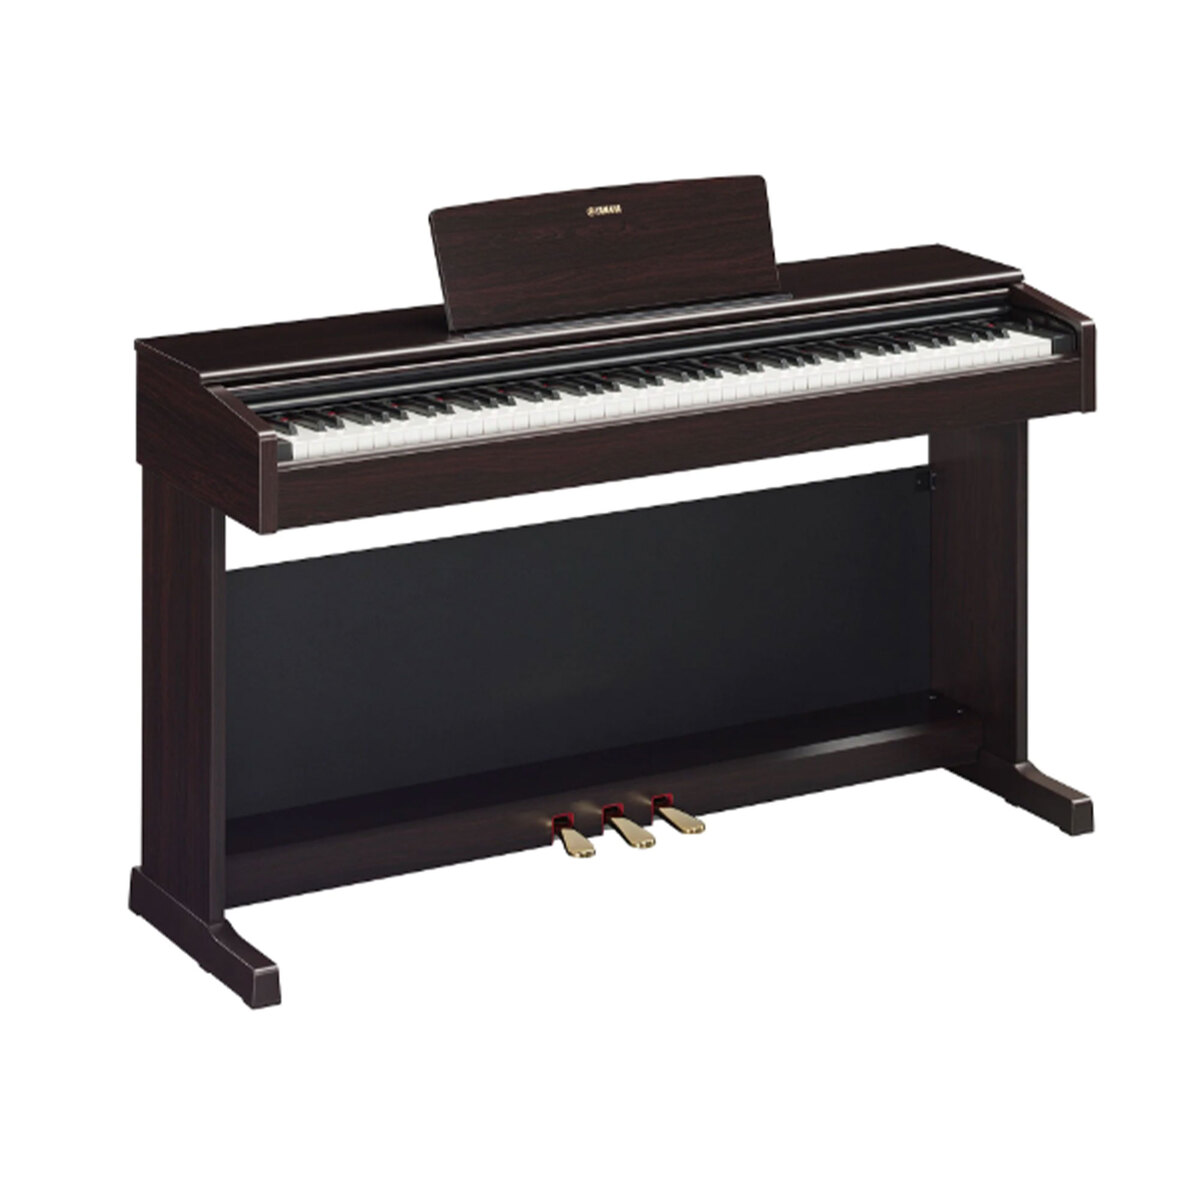 ياماها اريوس بيانو رقمي ، لون خشبي داكن ، YDP-145R